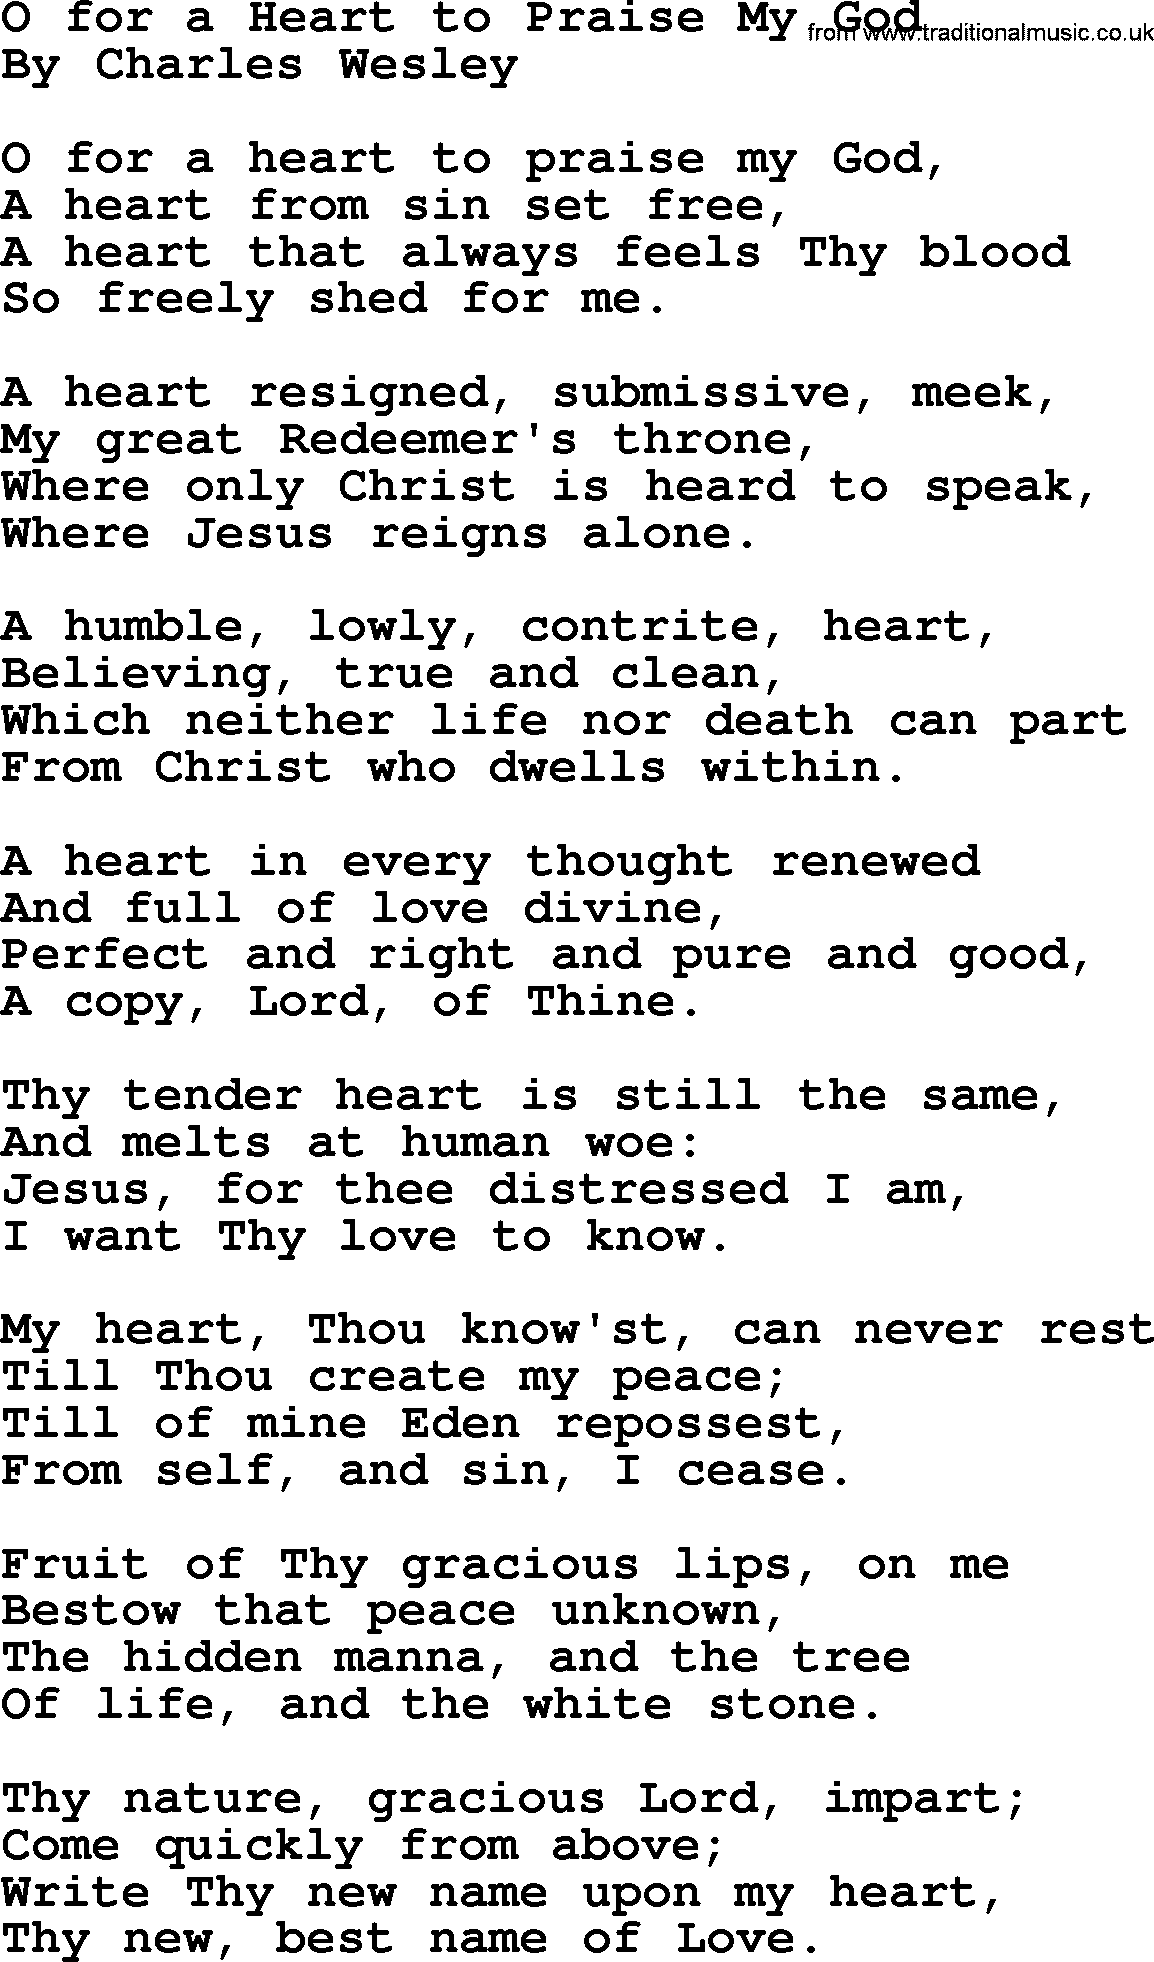 Charles Wesley hymn: O For A Heart To Praise My God, lyrics